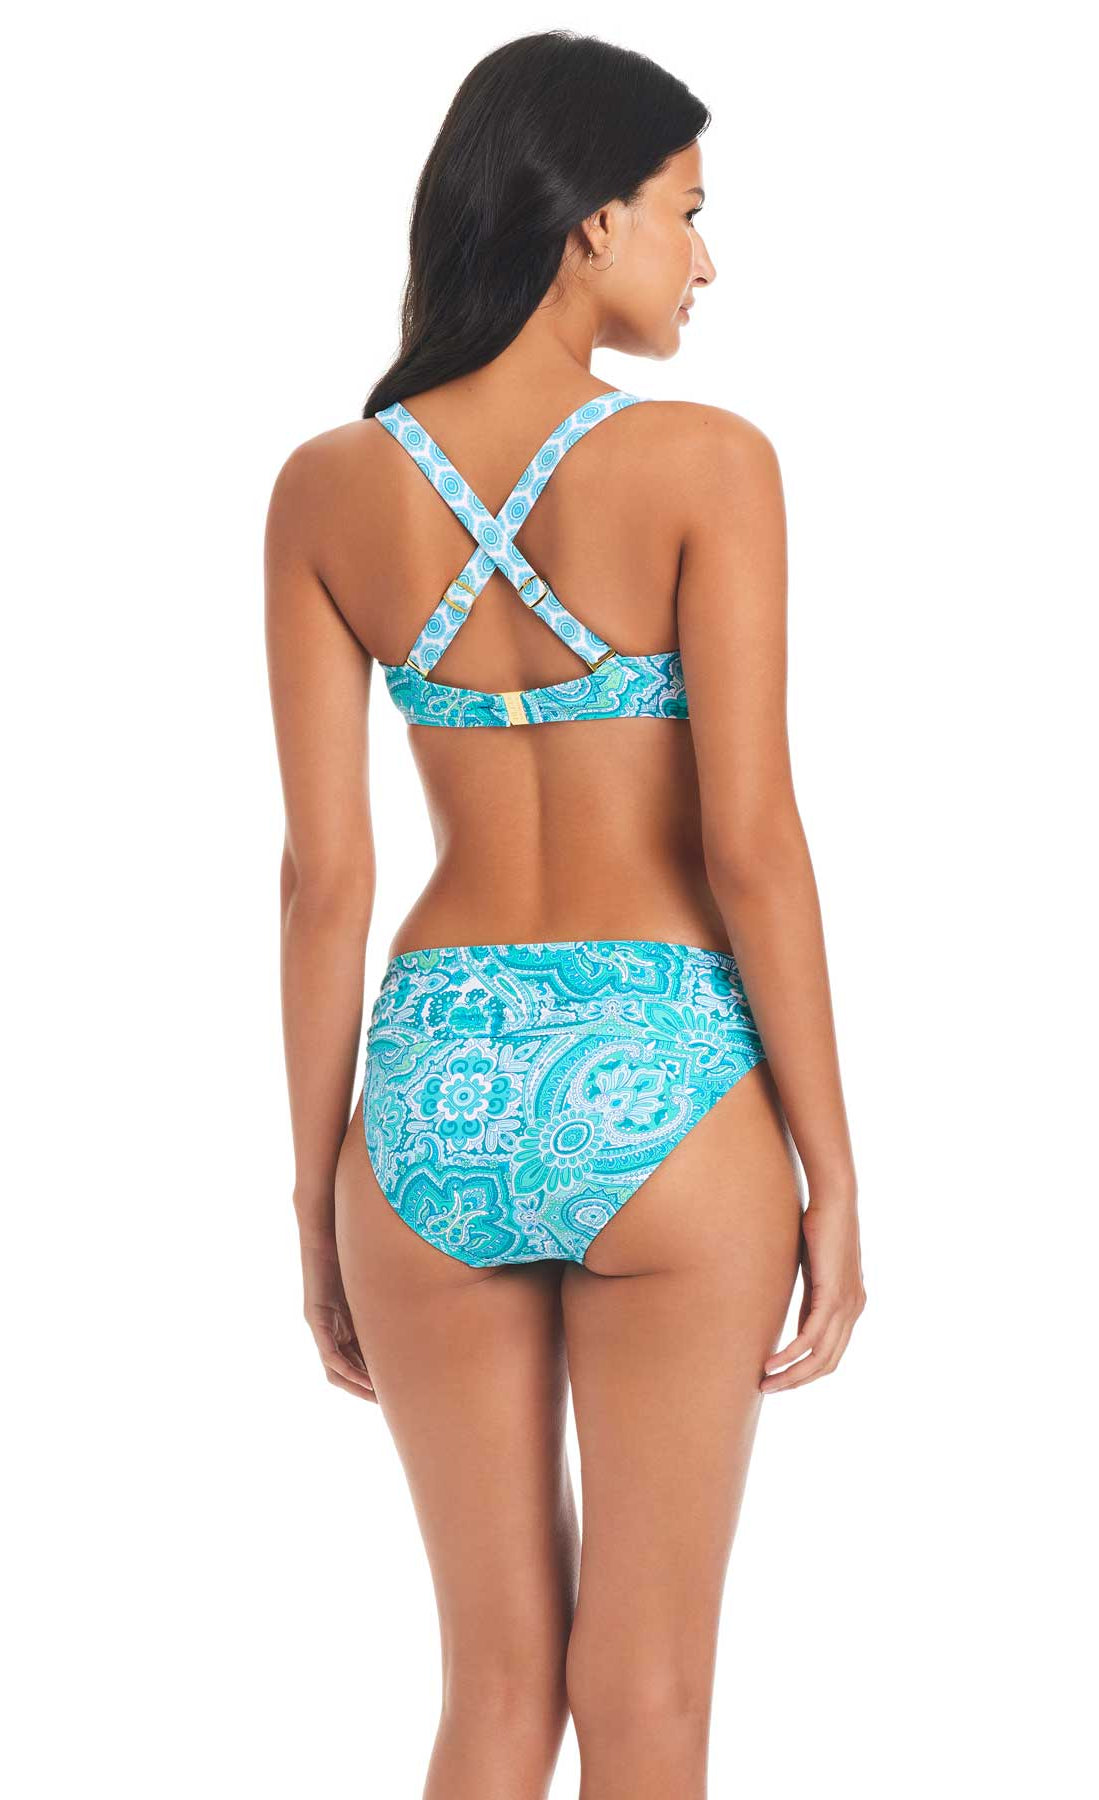 SKYE Mamanuca Sarah D/DD/E Cup Bralette Bikini Top - Tropical blue